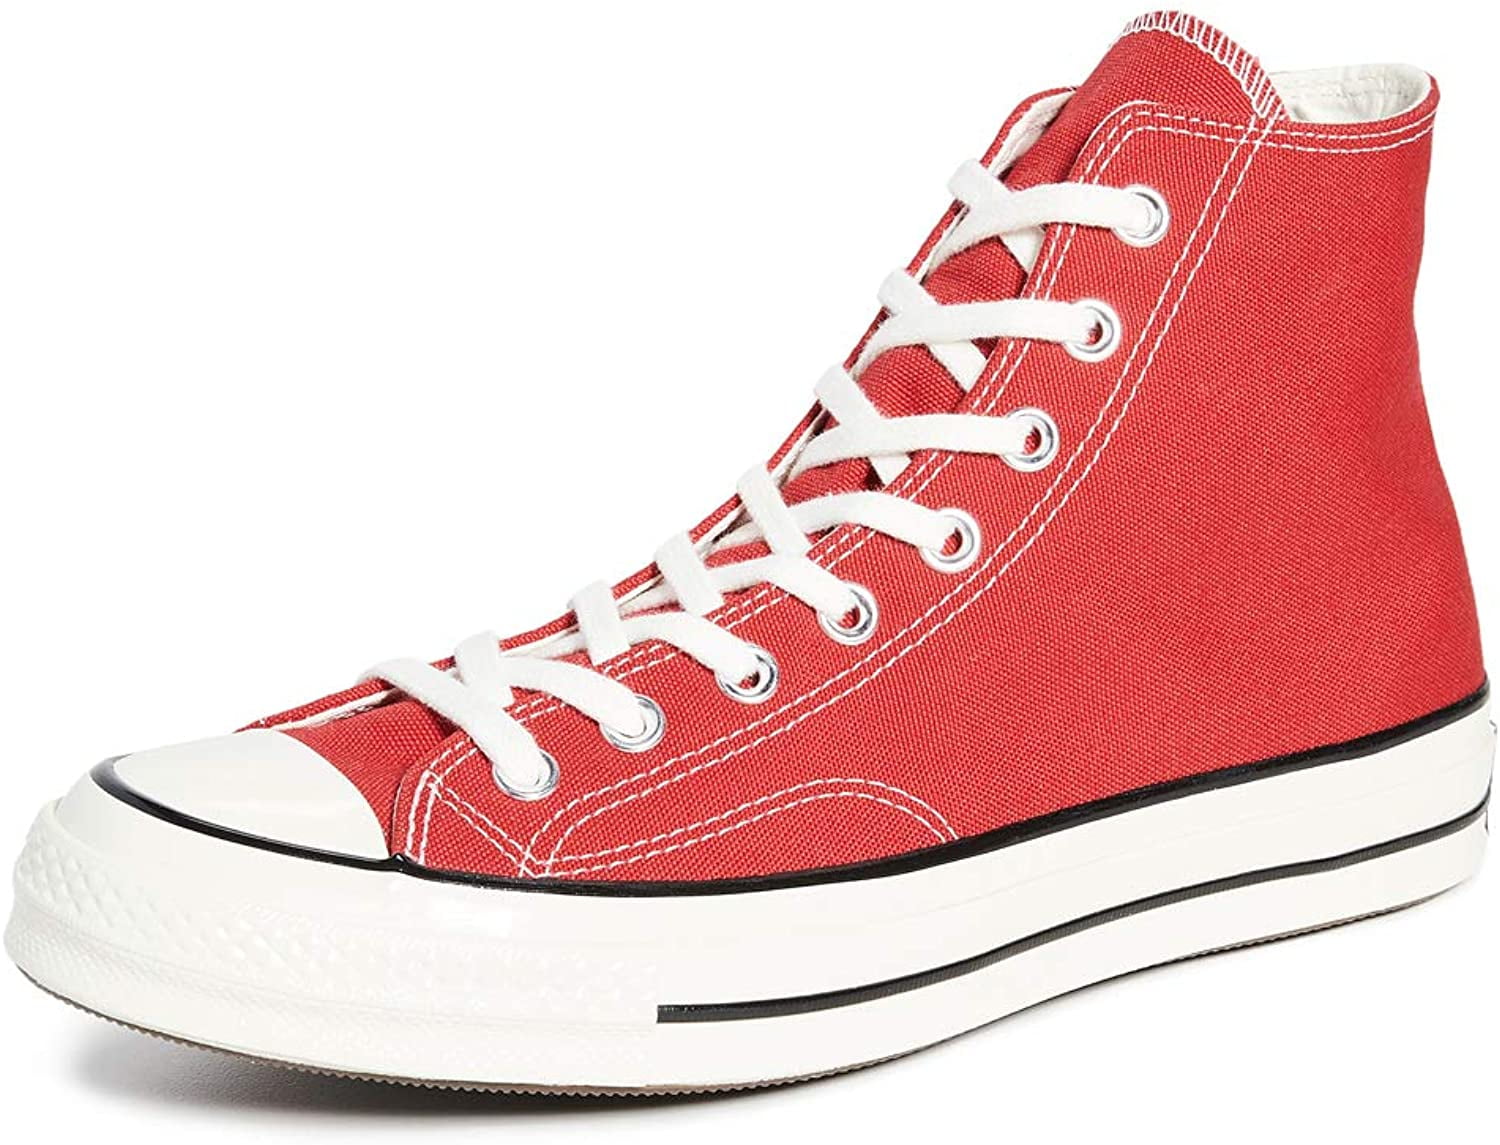 Converse Mens Chuck Taylor All Star High Top Sneakers, Enamel Red, 8.5 Medium US - Walmart.com